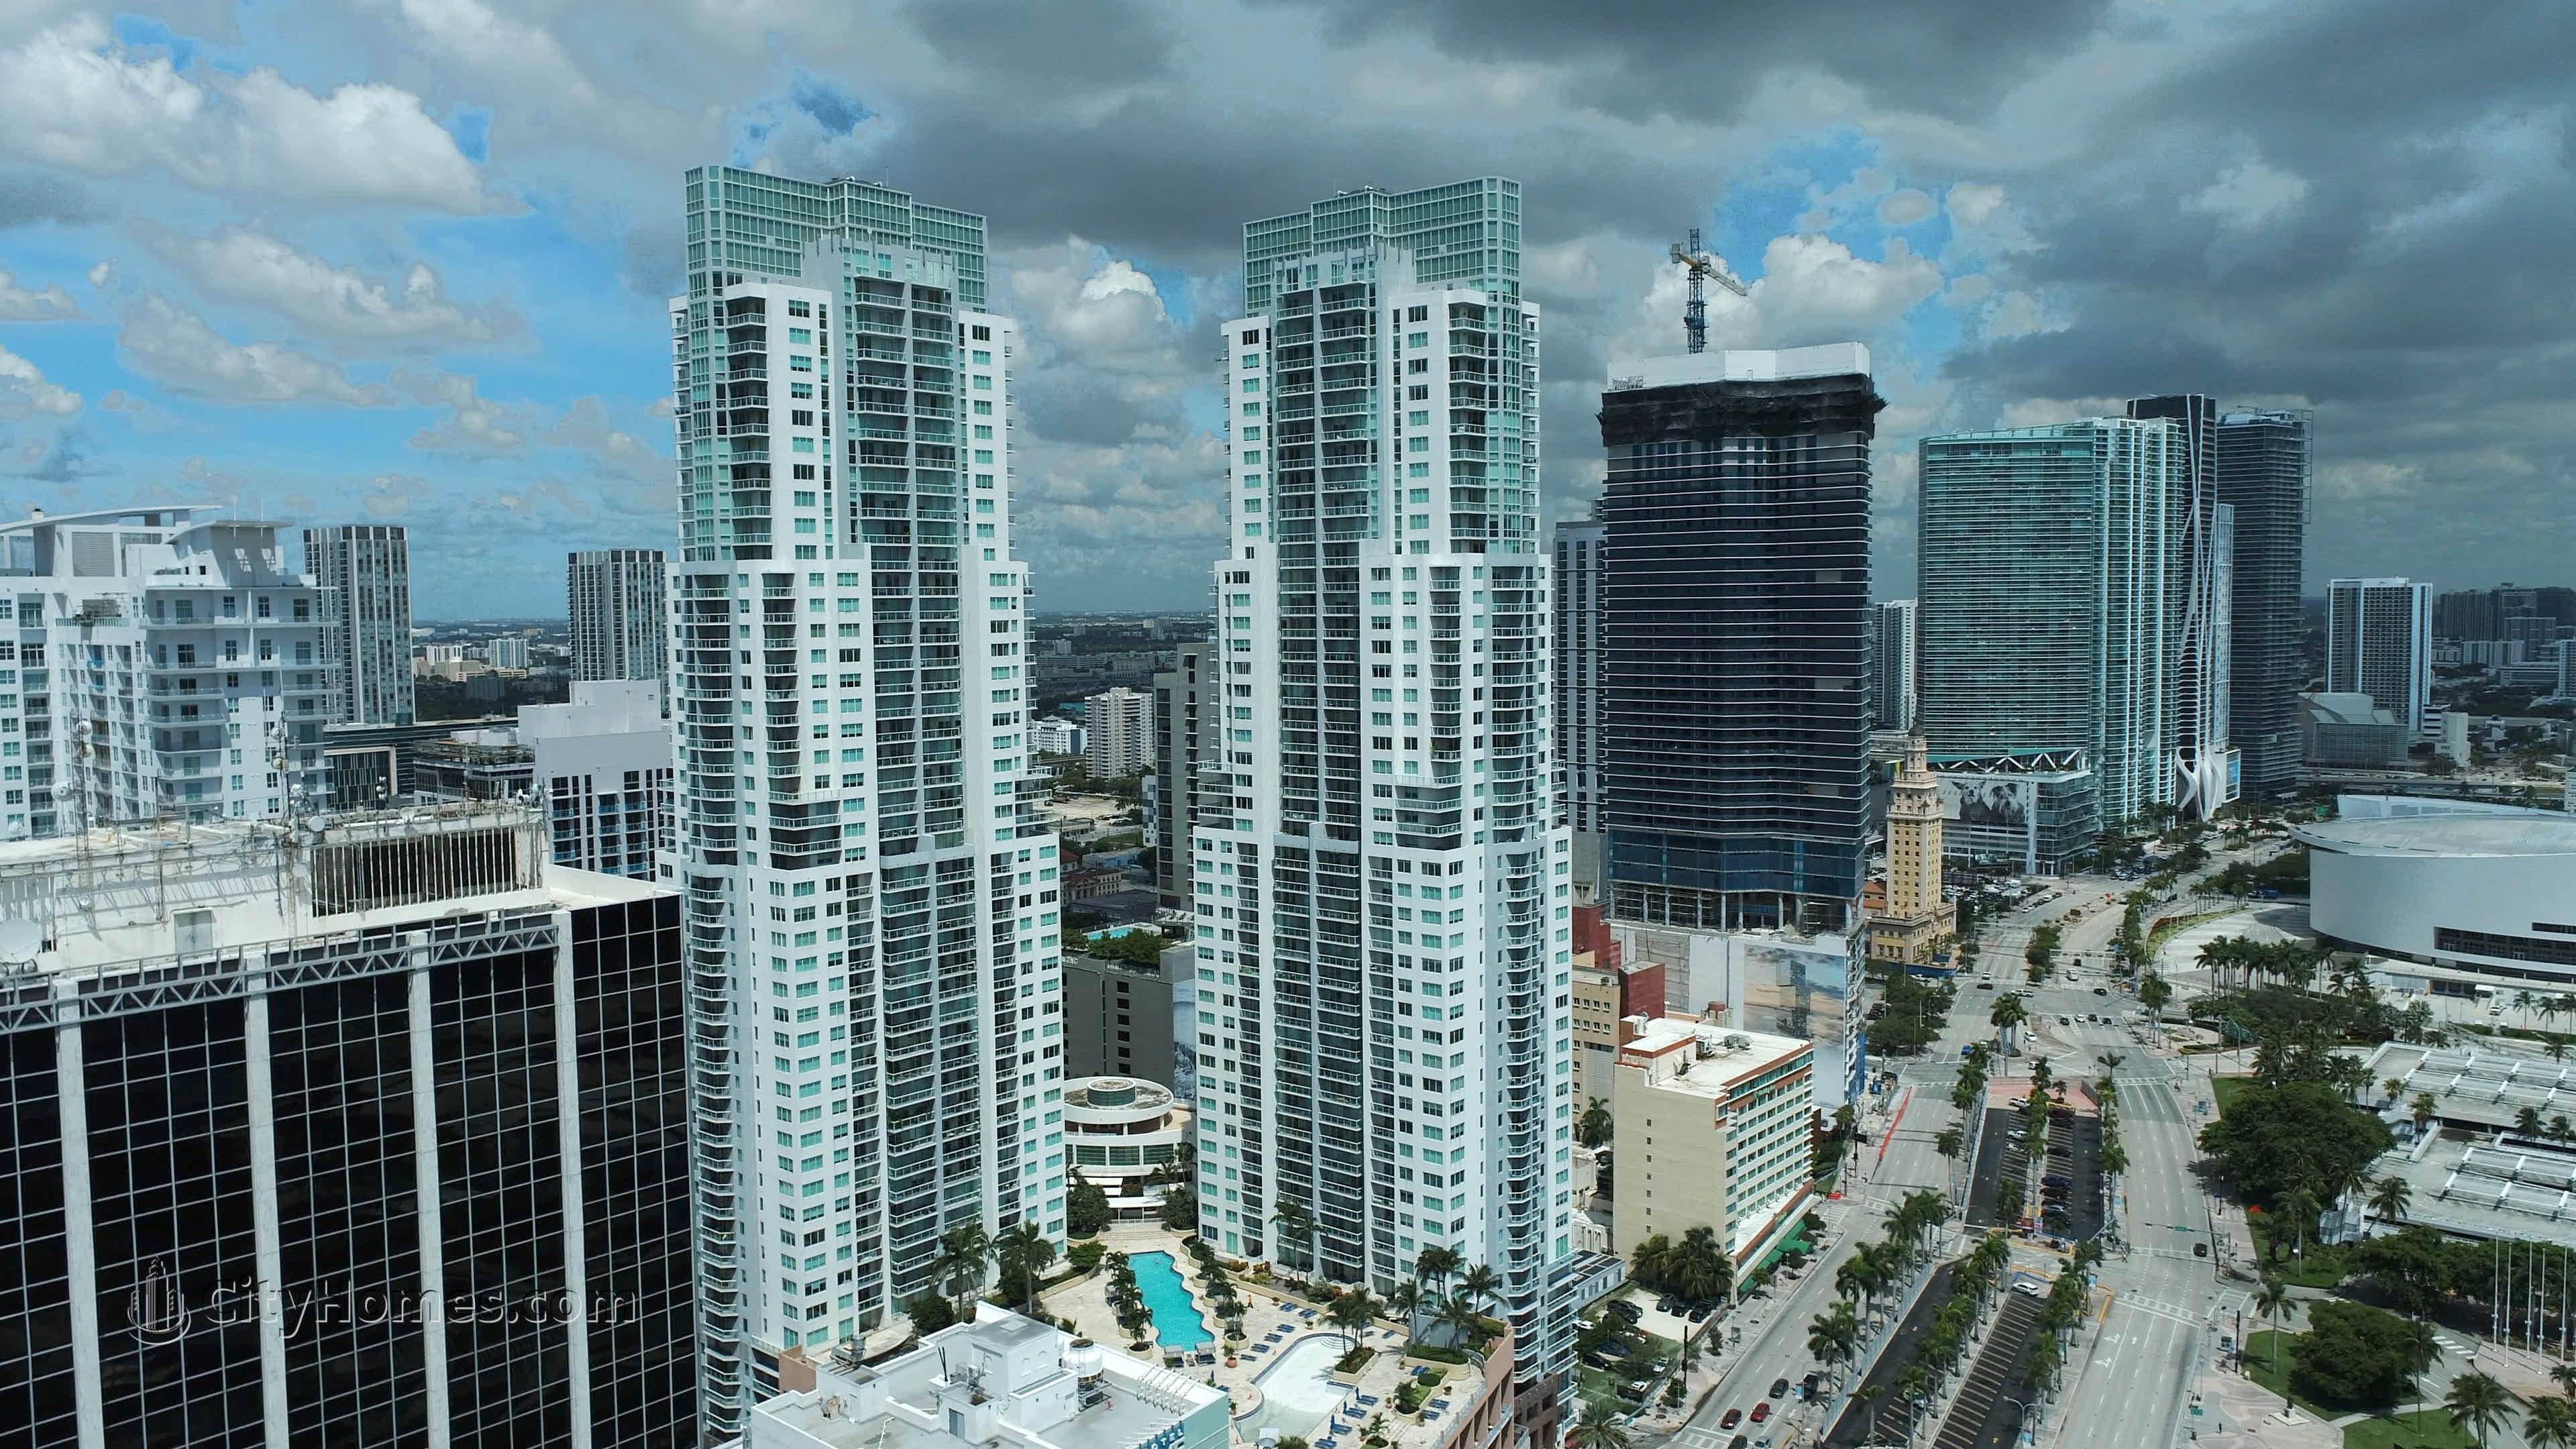 Vizcayne South building at 253 NE 2nd Street, Downtown Miami, Miami, FL 33132